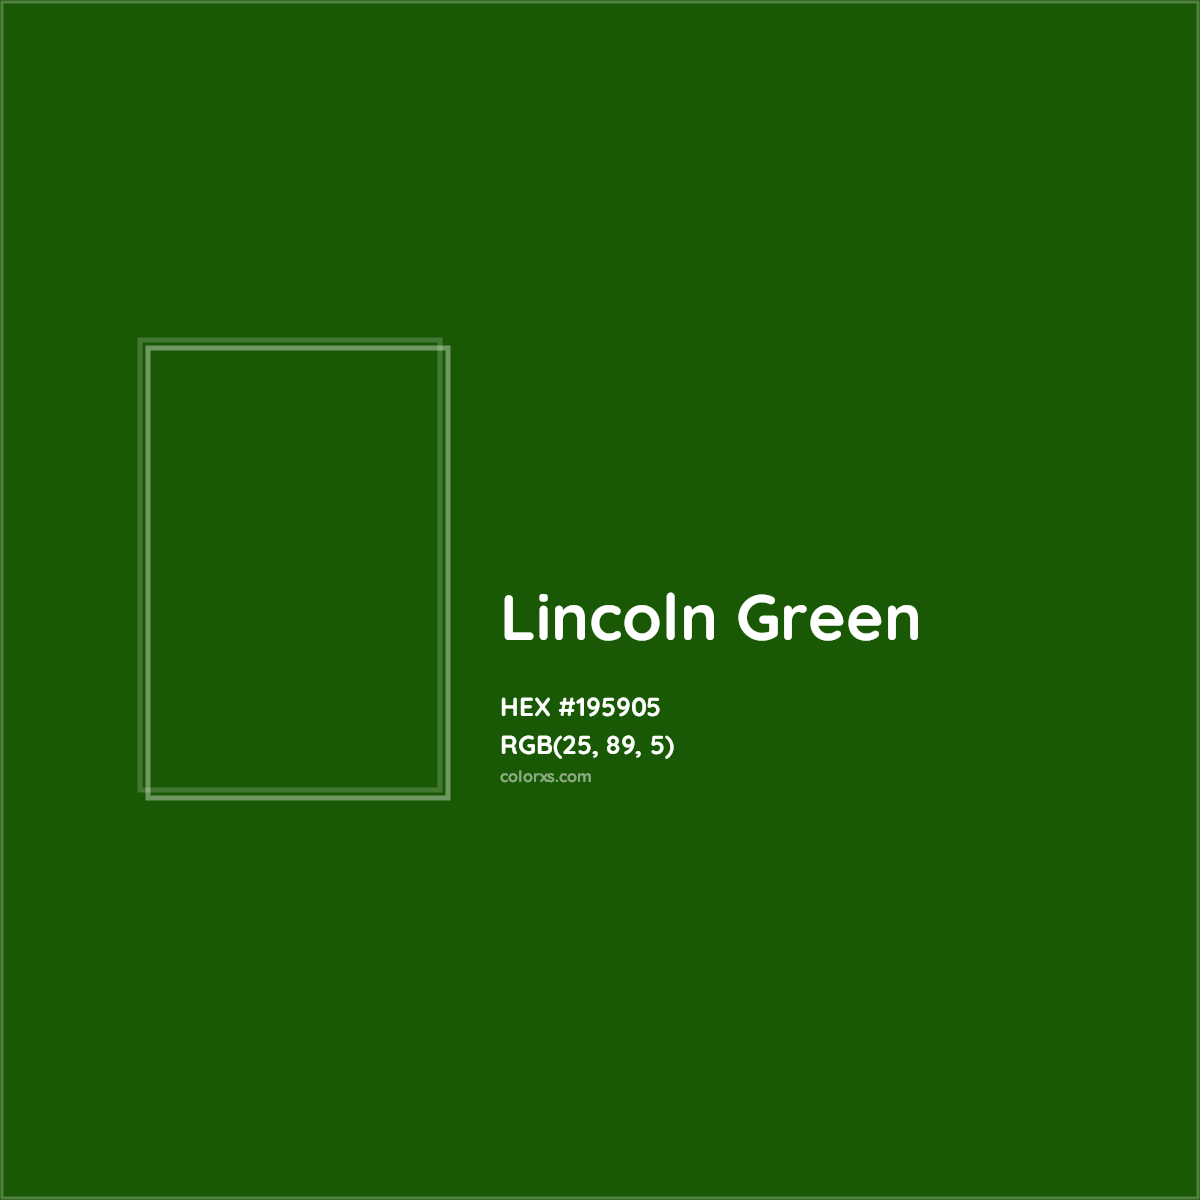 Lincoln Green